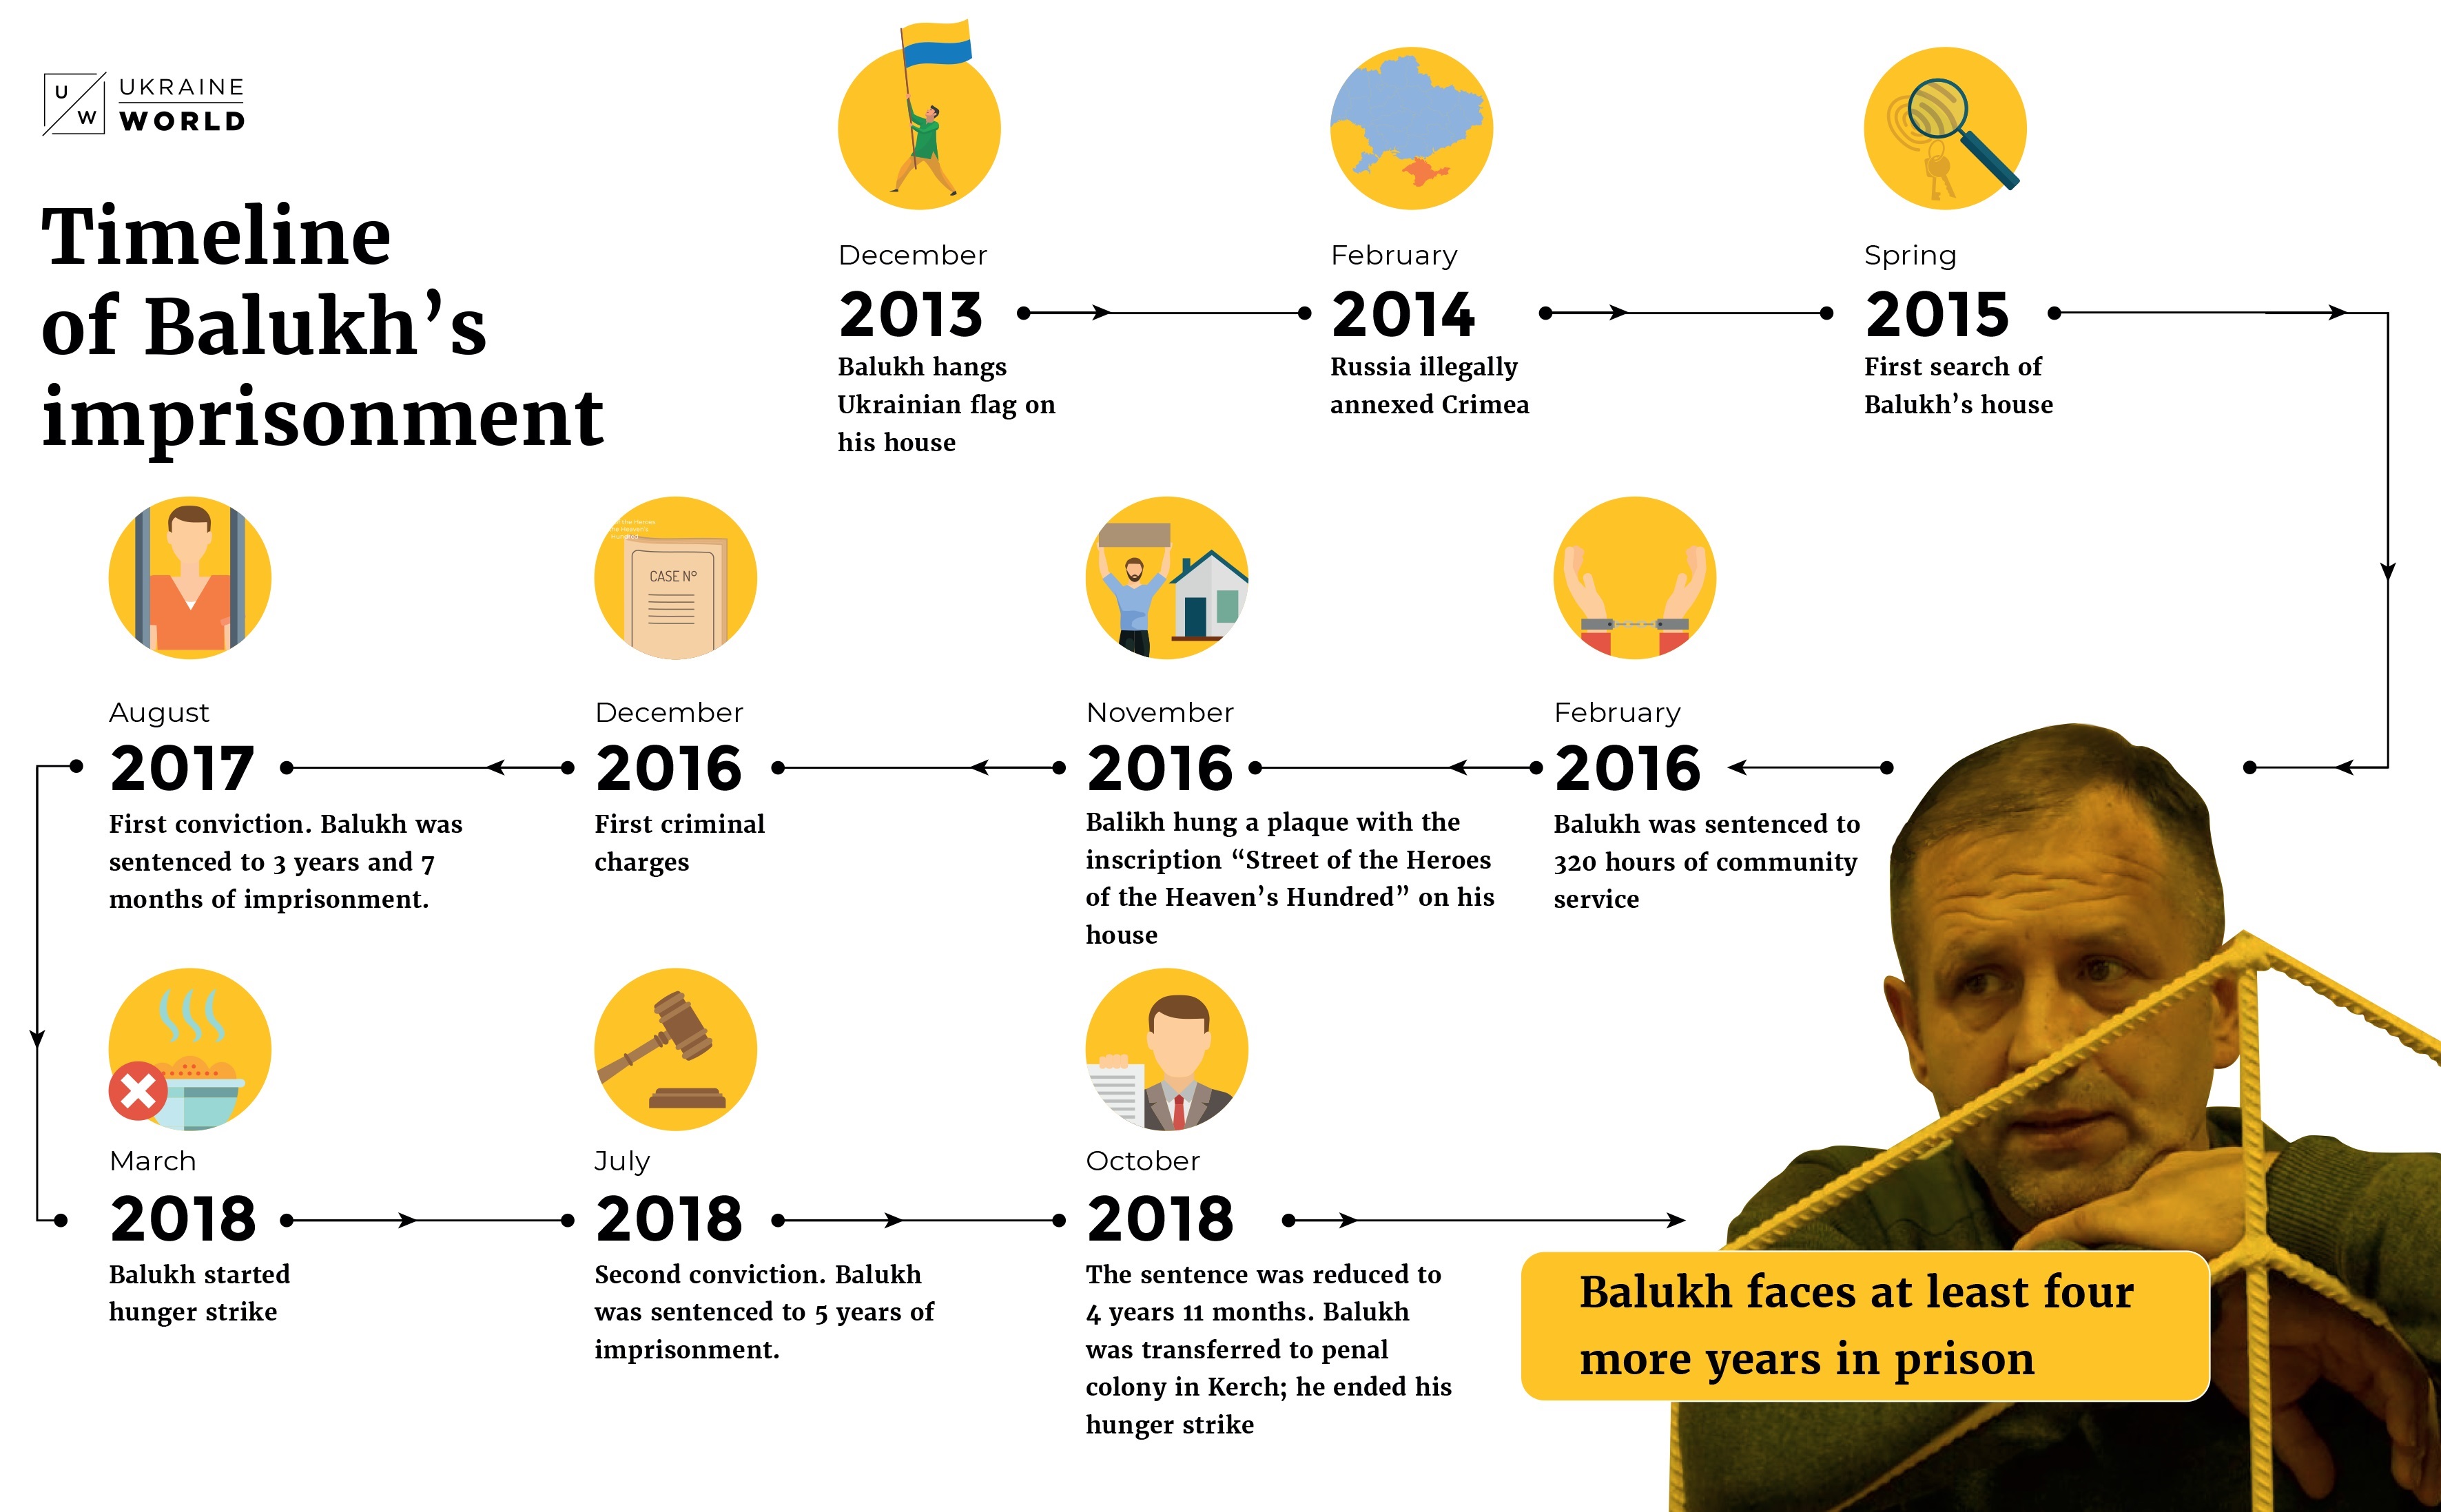 2019 Timeline of Balukhs imprisonment